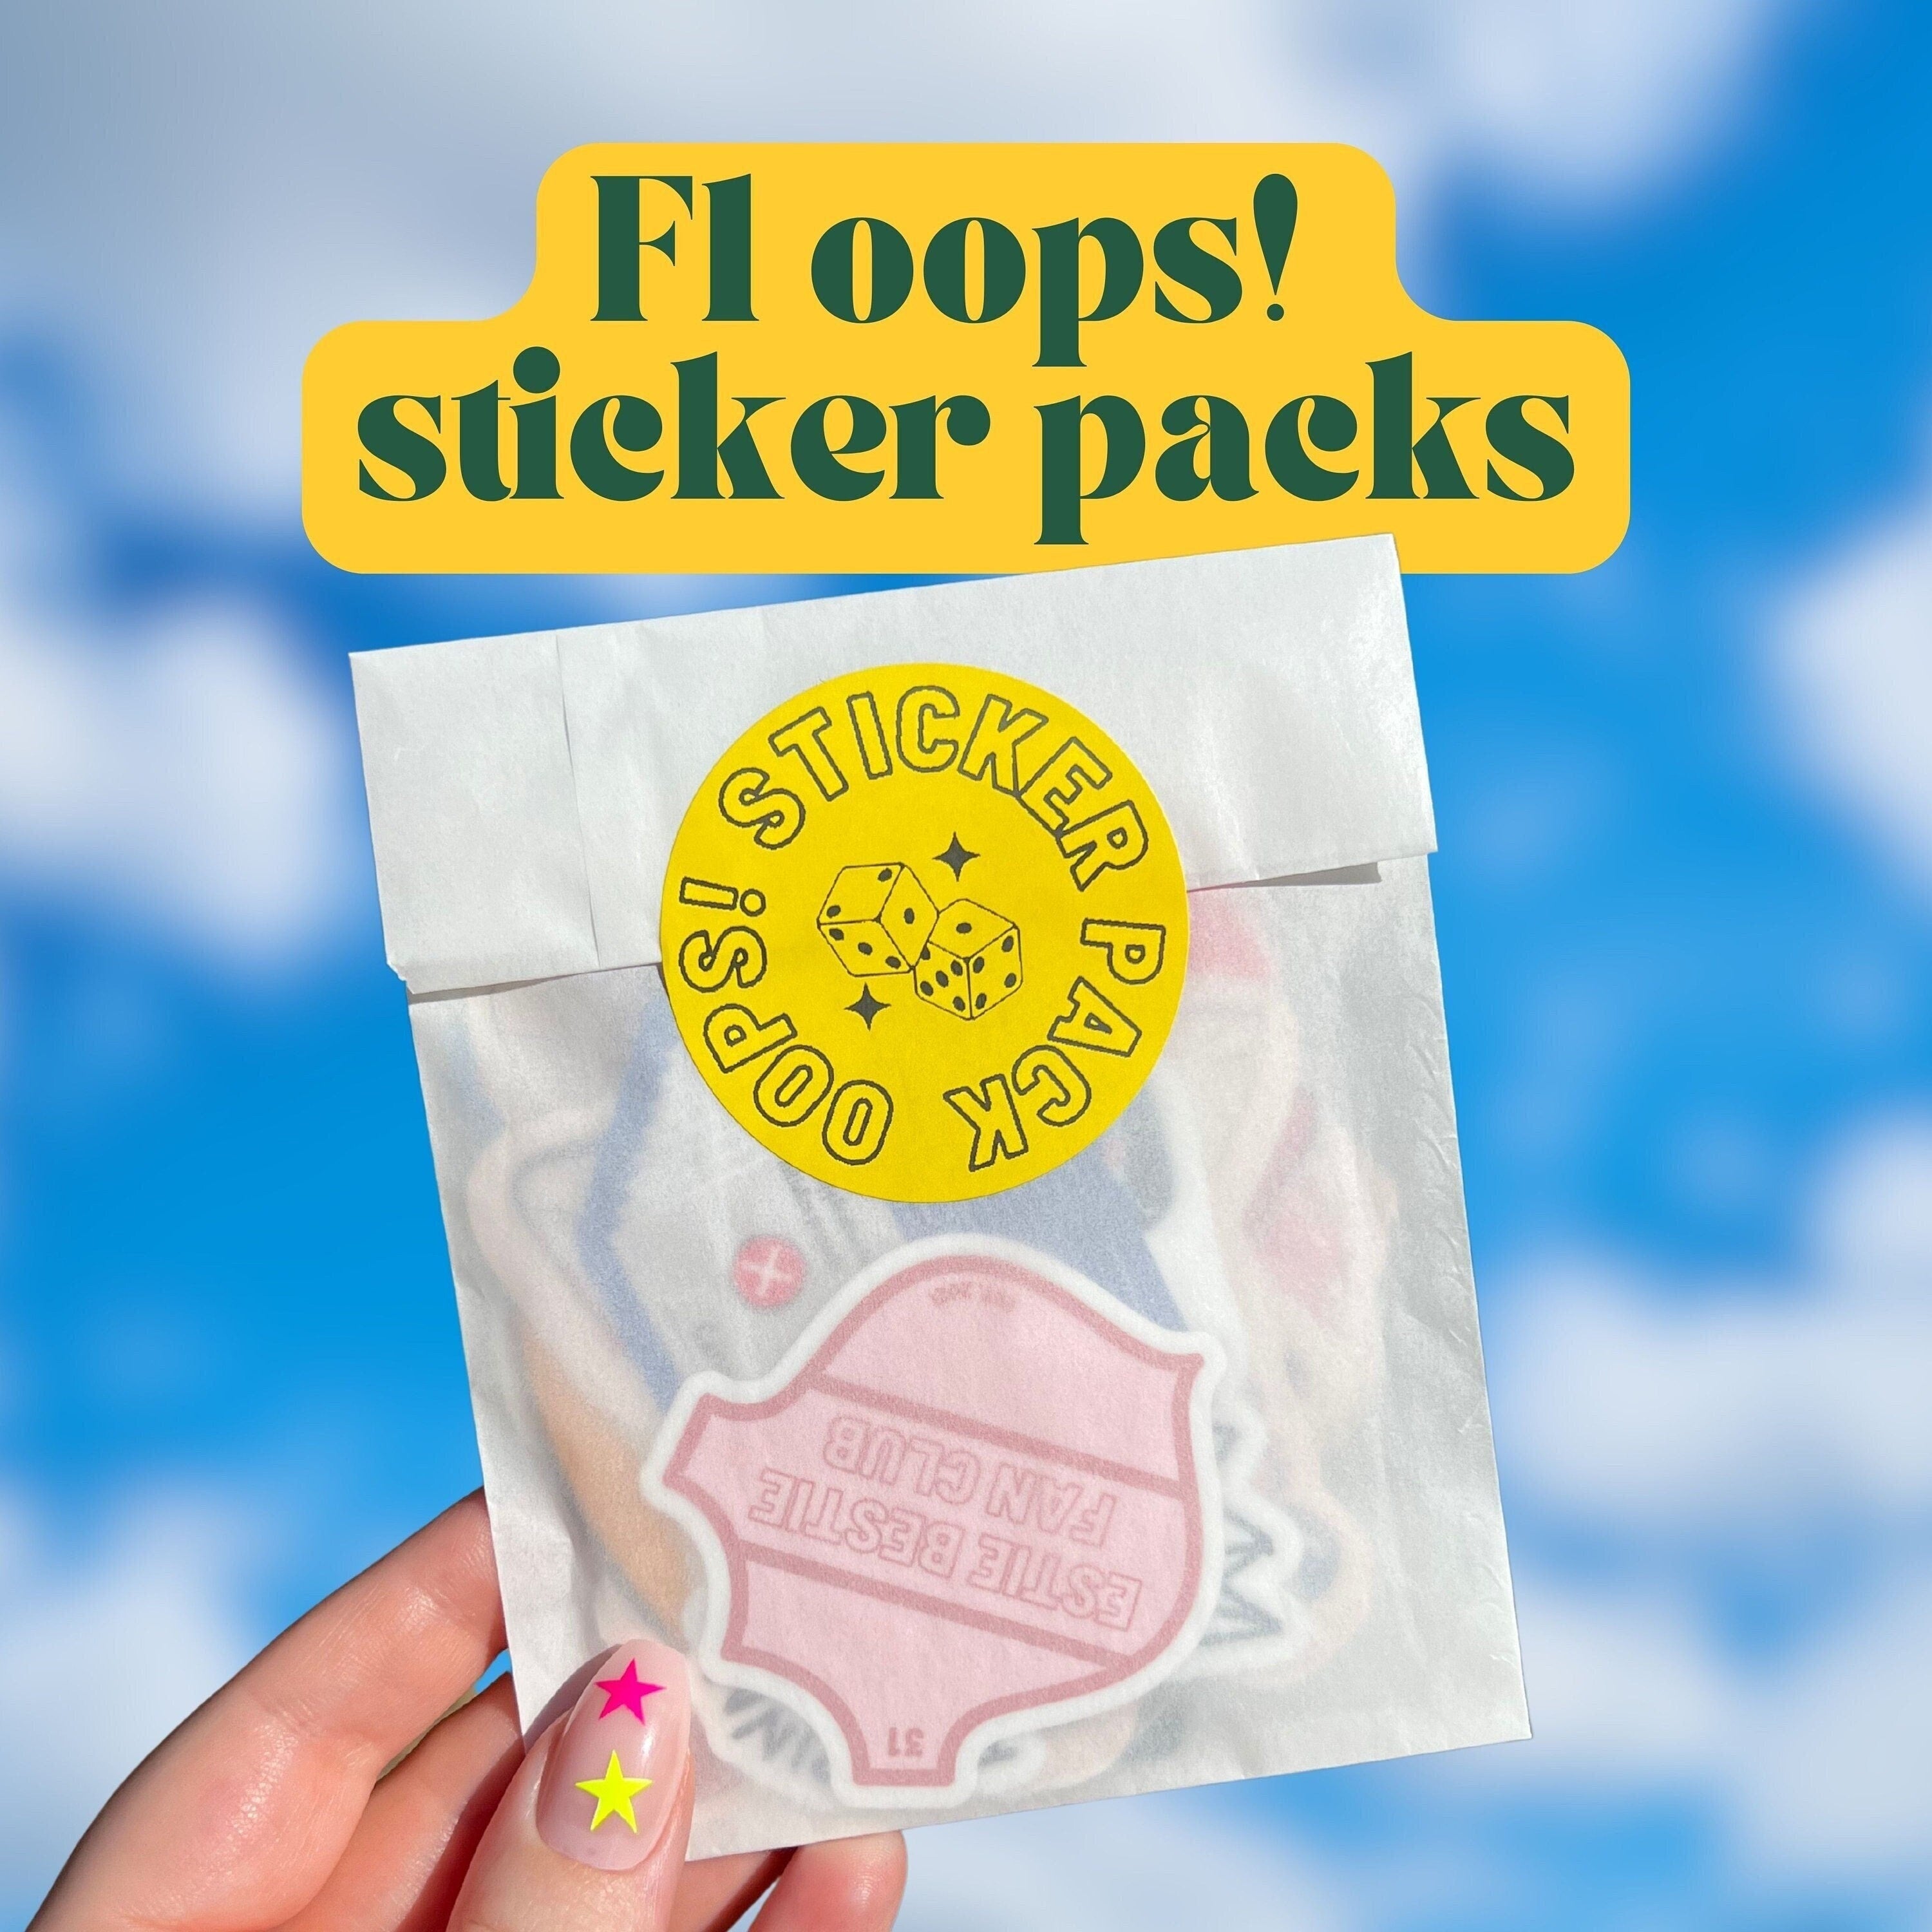 Oops! F1 sticker packs